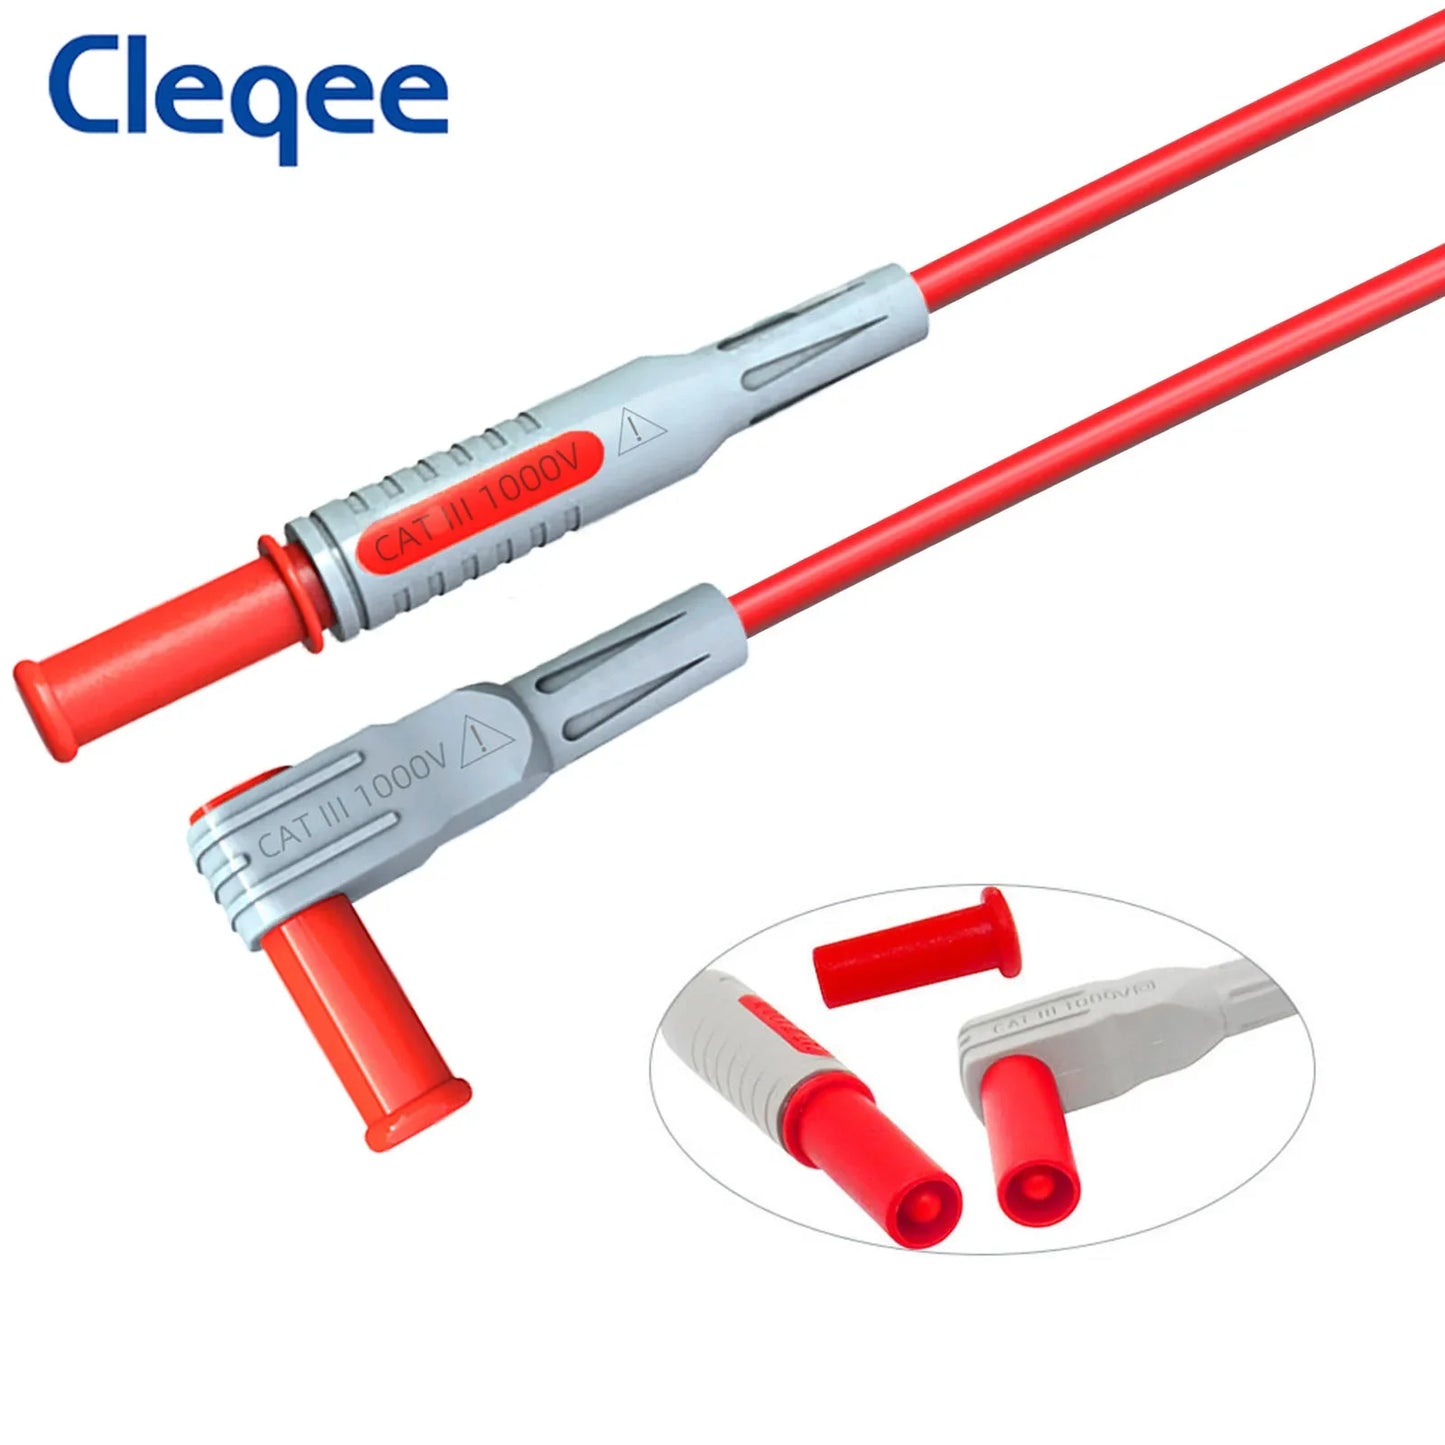 Cleqee P1300 Series Multimeter Test Lead kit 4mm Banana Plug Cable Test Hook Clip Probe Alligator Clip Automotive Tool Kit